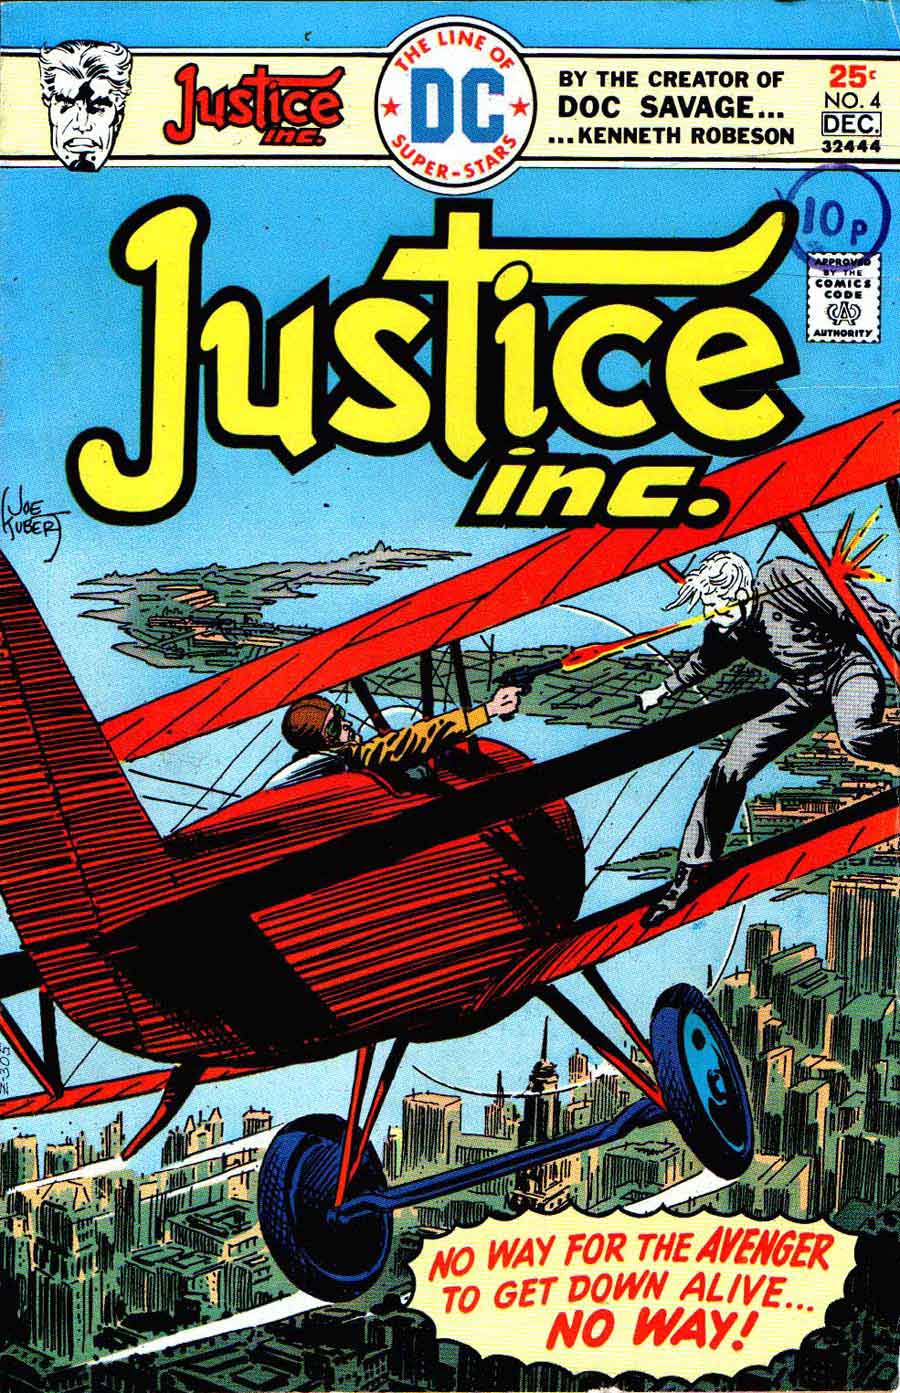 Justice Inc. v1 #4 dc bronze age comic book cover art by Joe Kubert